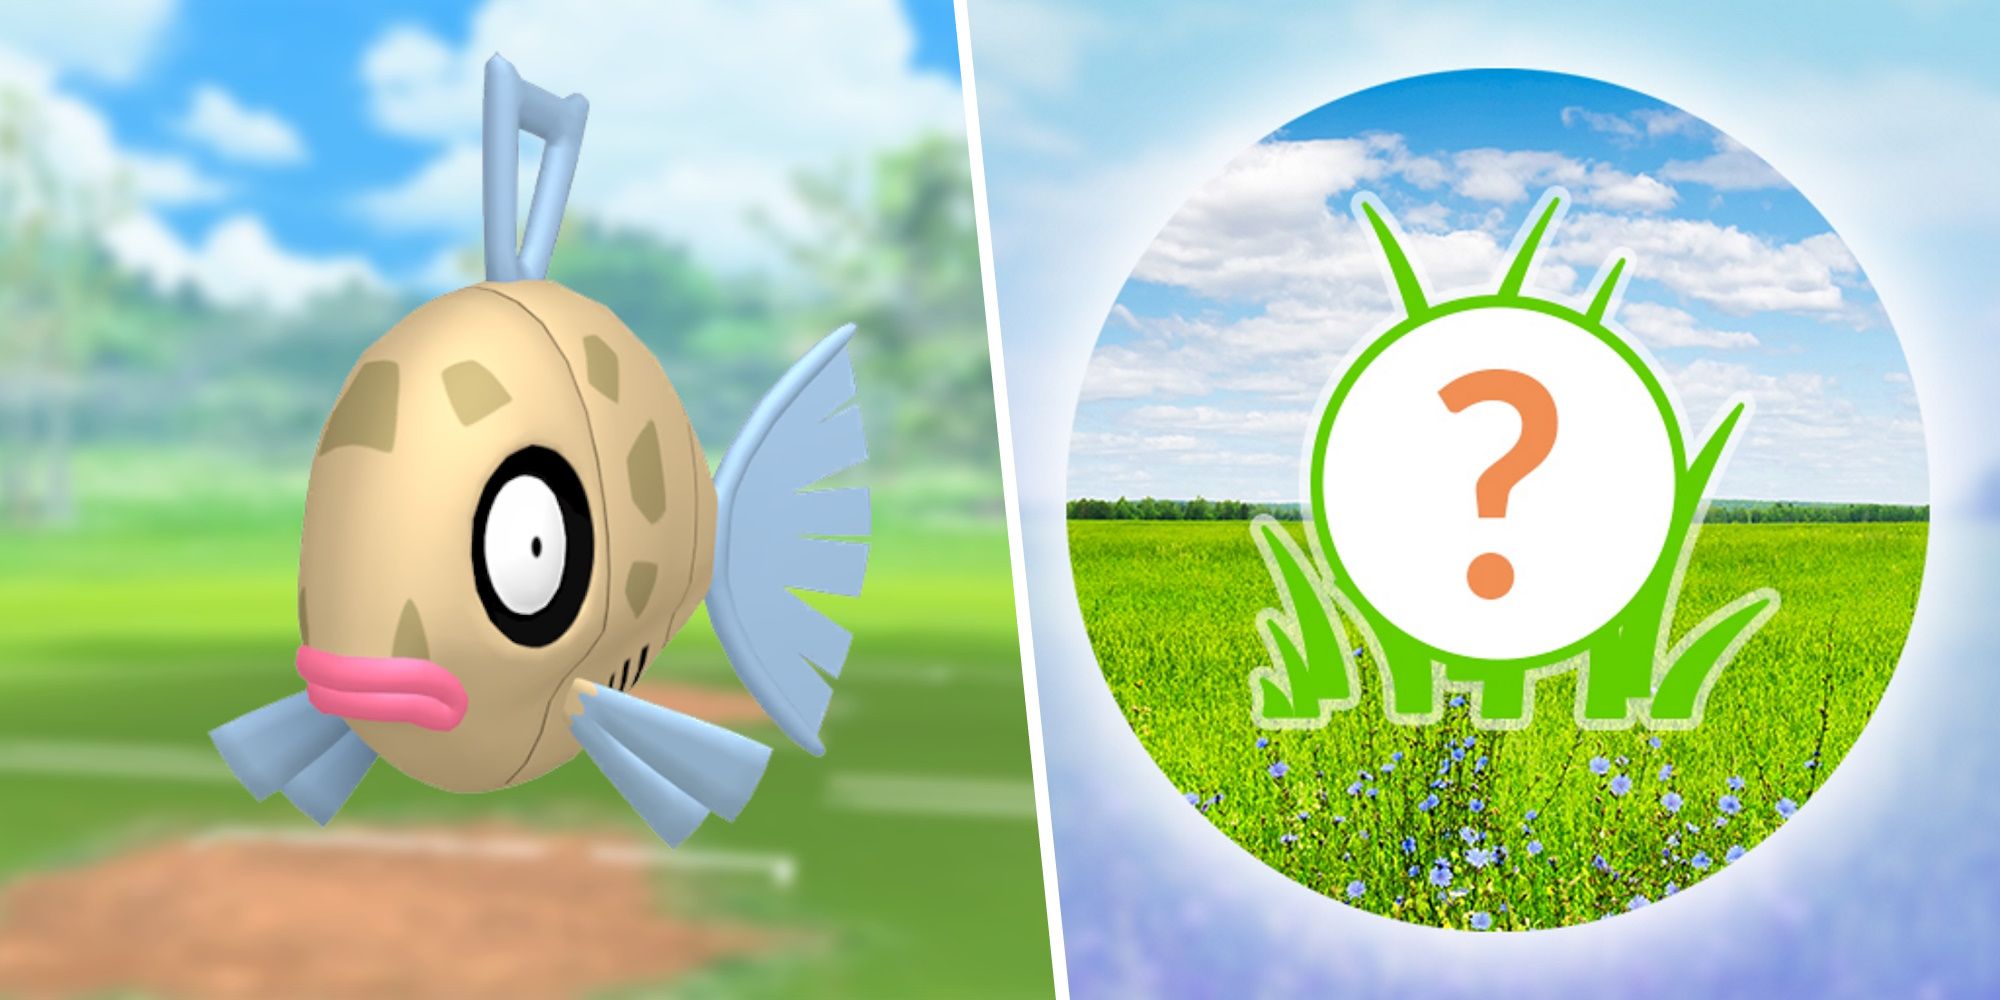 Image of Feebas split with an image of the Pokemon Go wild encounter symbol